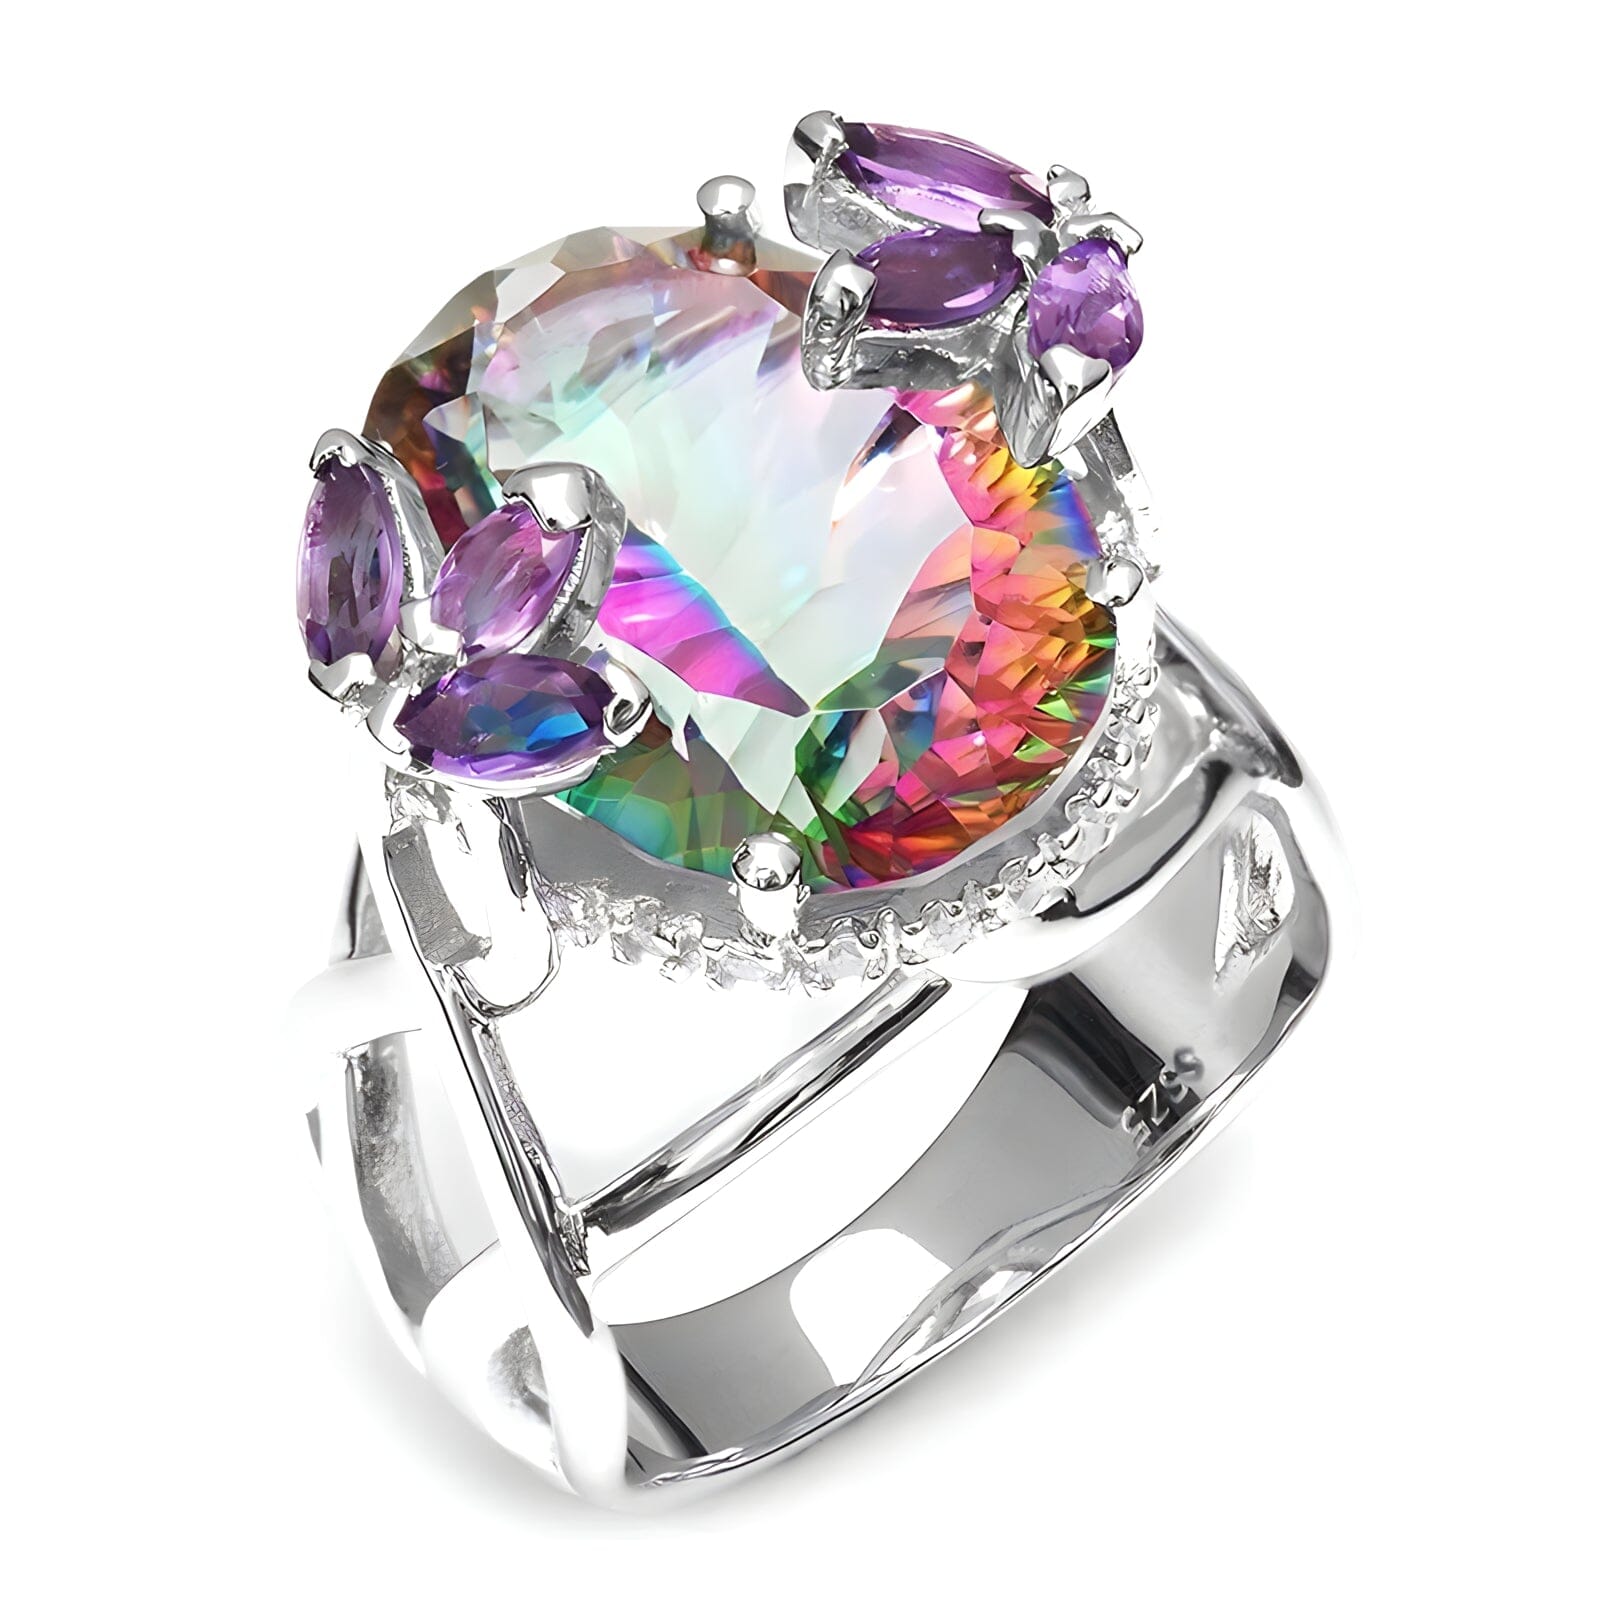 The Seraphine Crystal Ring SA Formal 5 